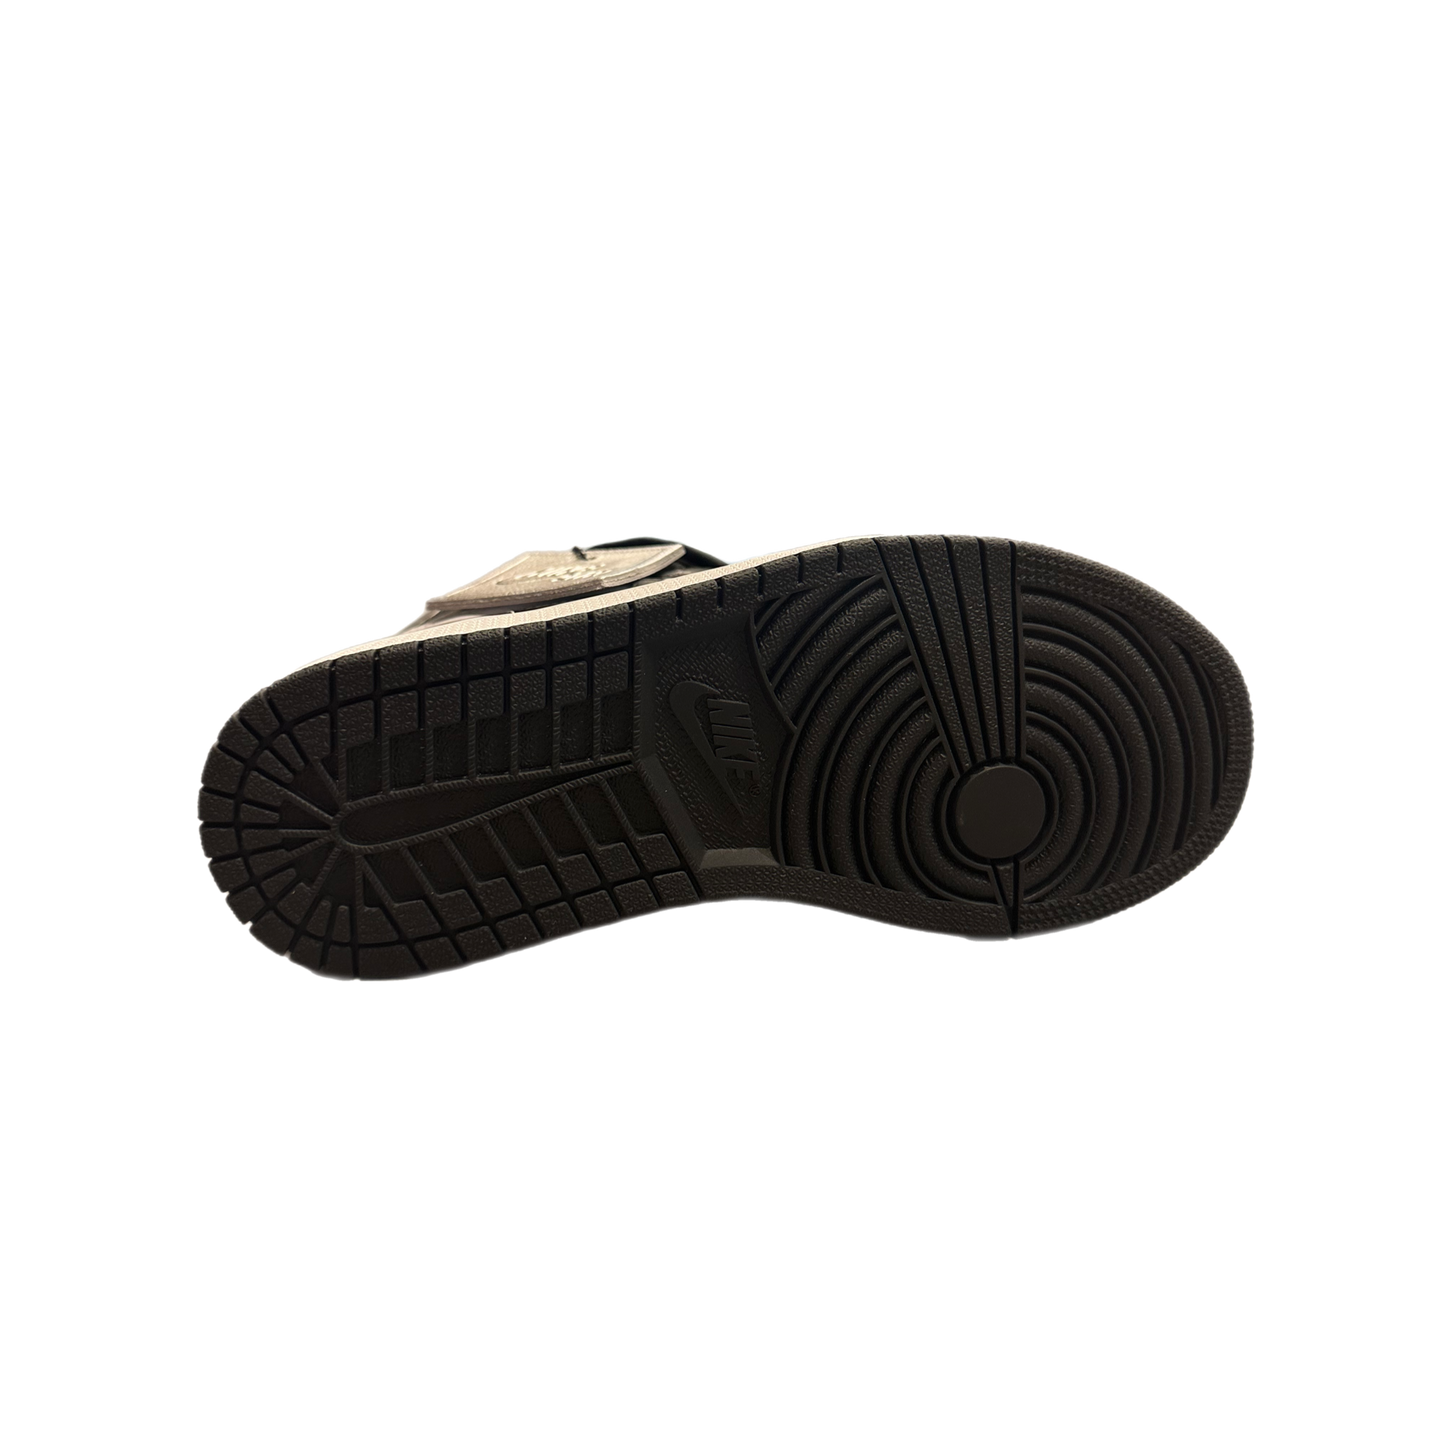 Jordan - "1 High Silver Toe" - Size 8.5